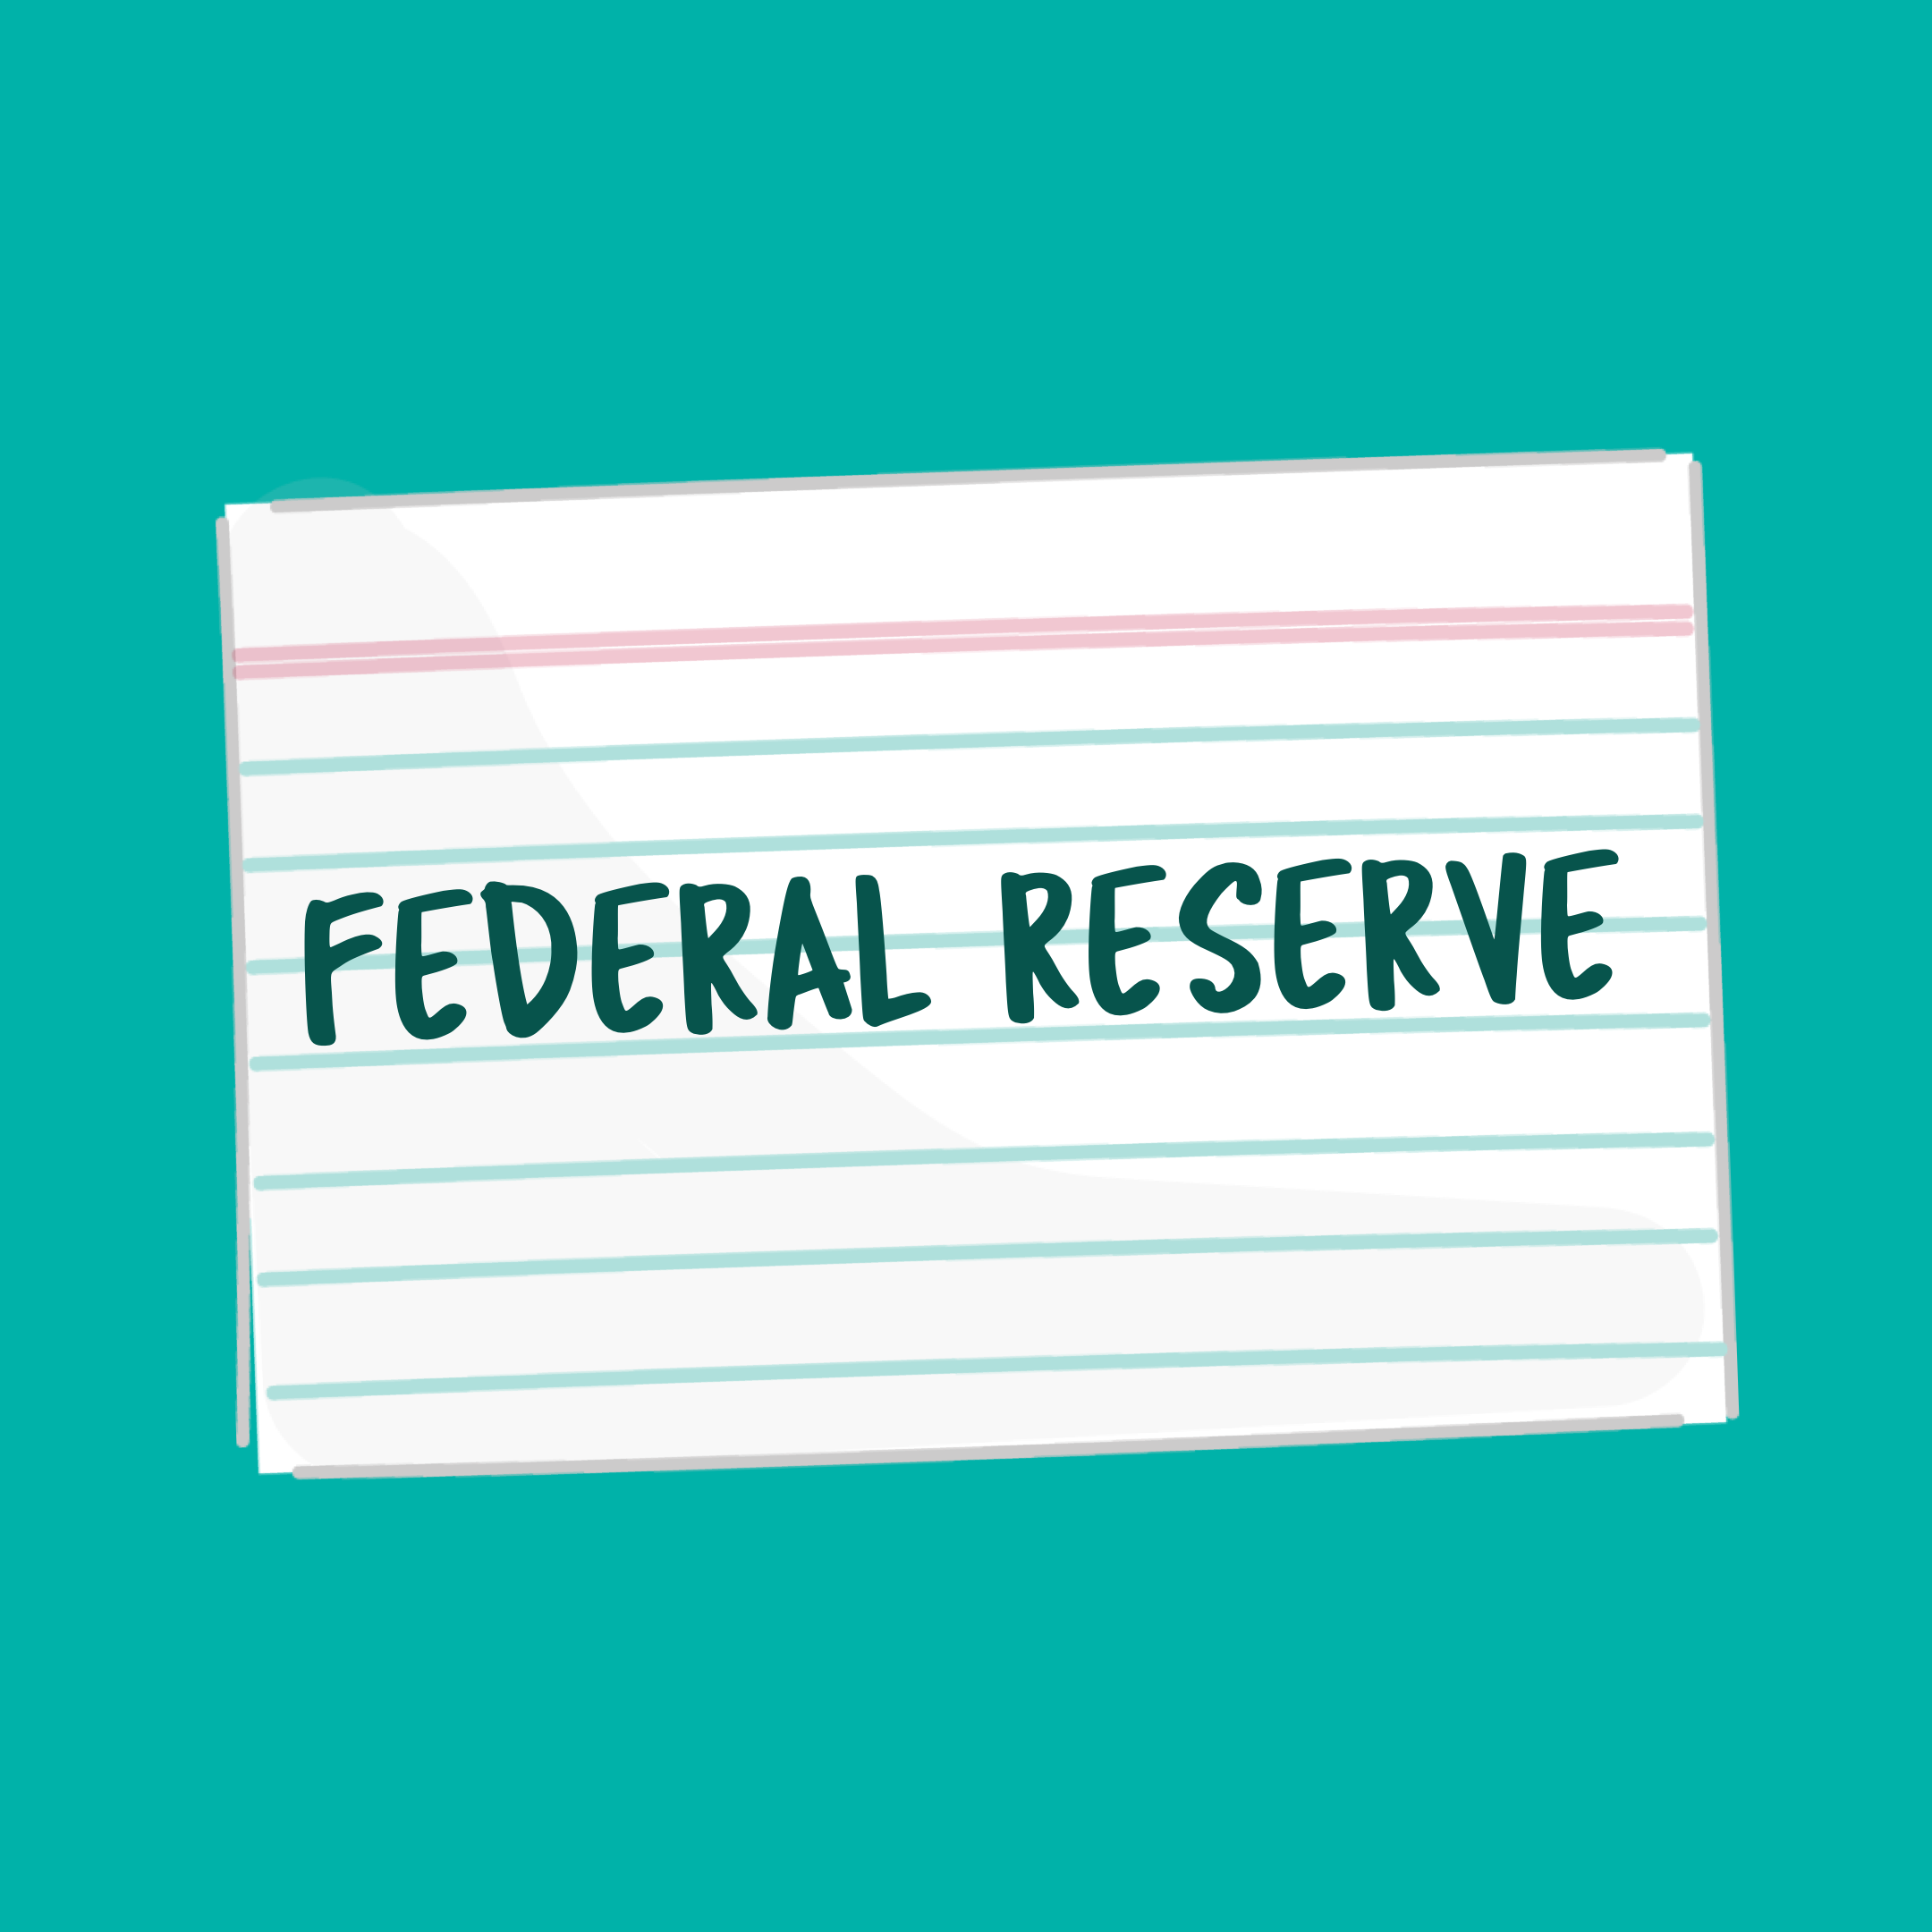 Federal Reserve card